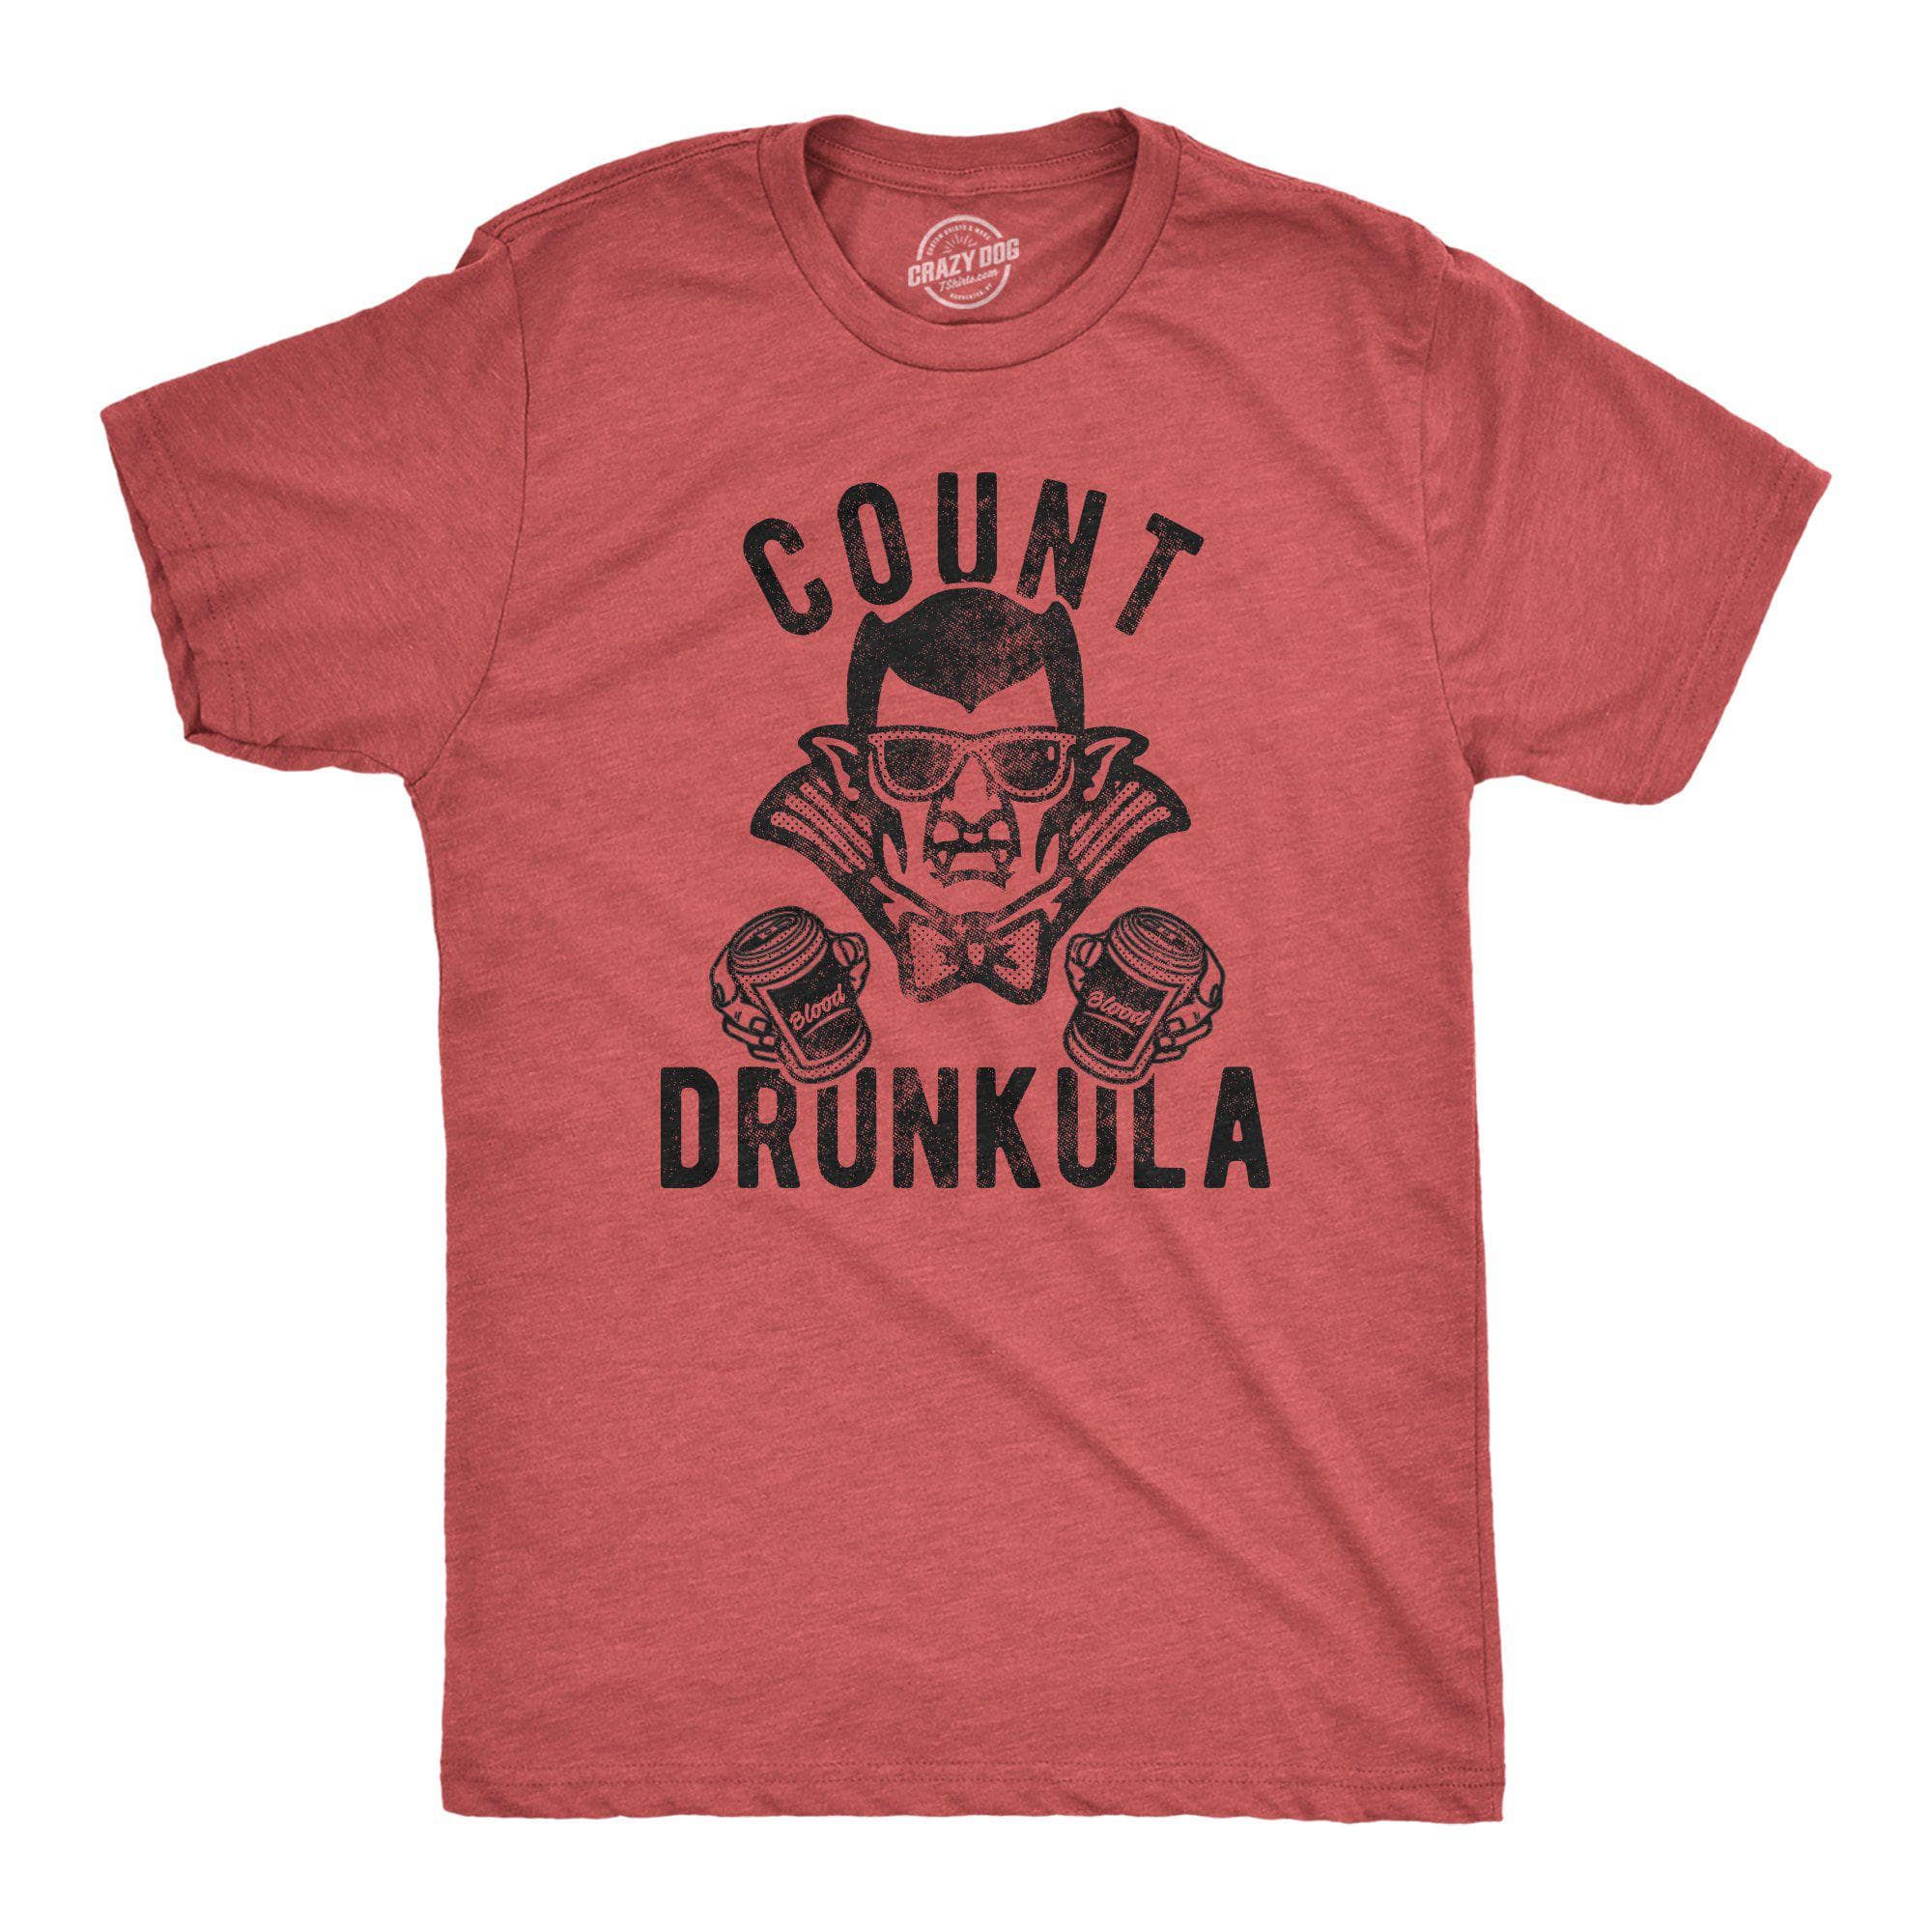 Count Drunkula Men's Tshirt - Crazy Dog T-Shirts